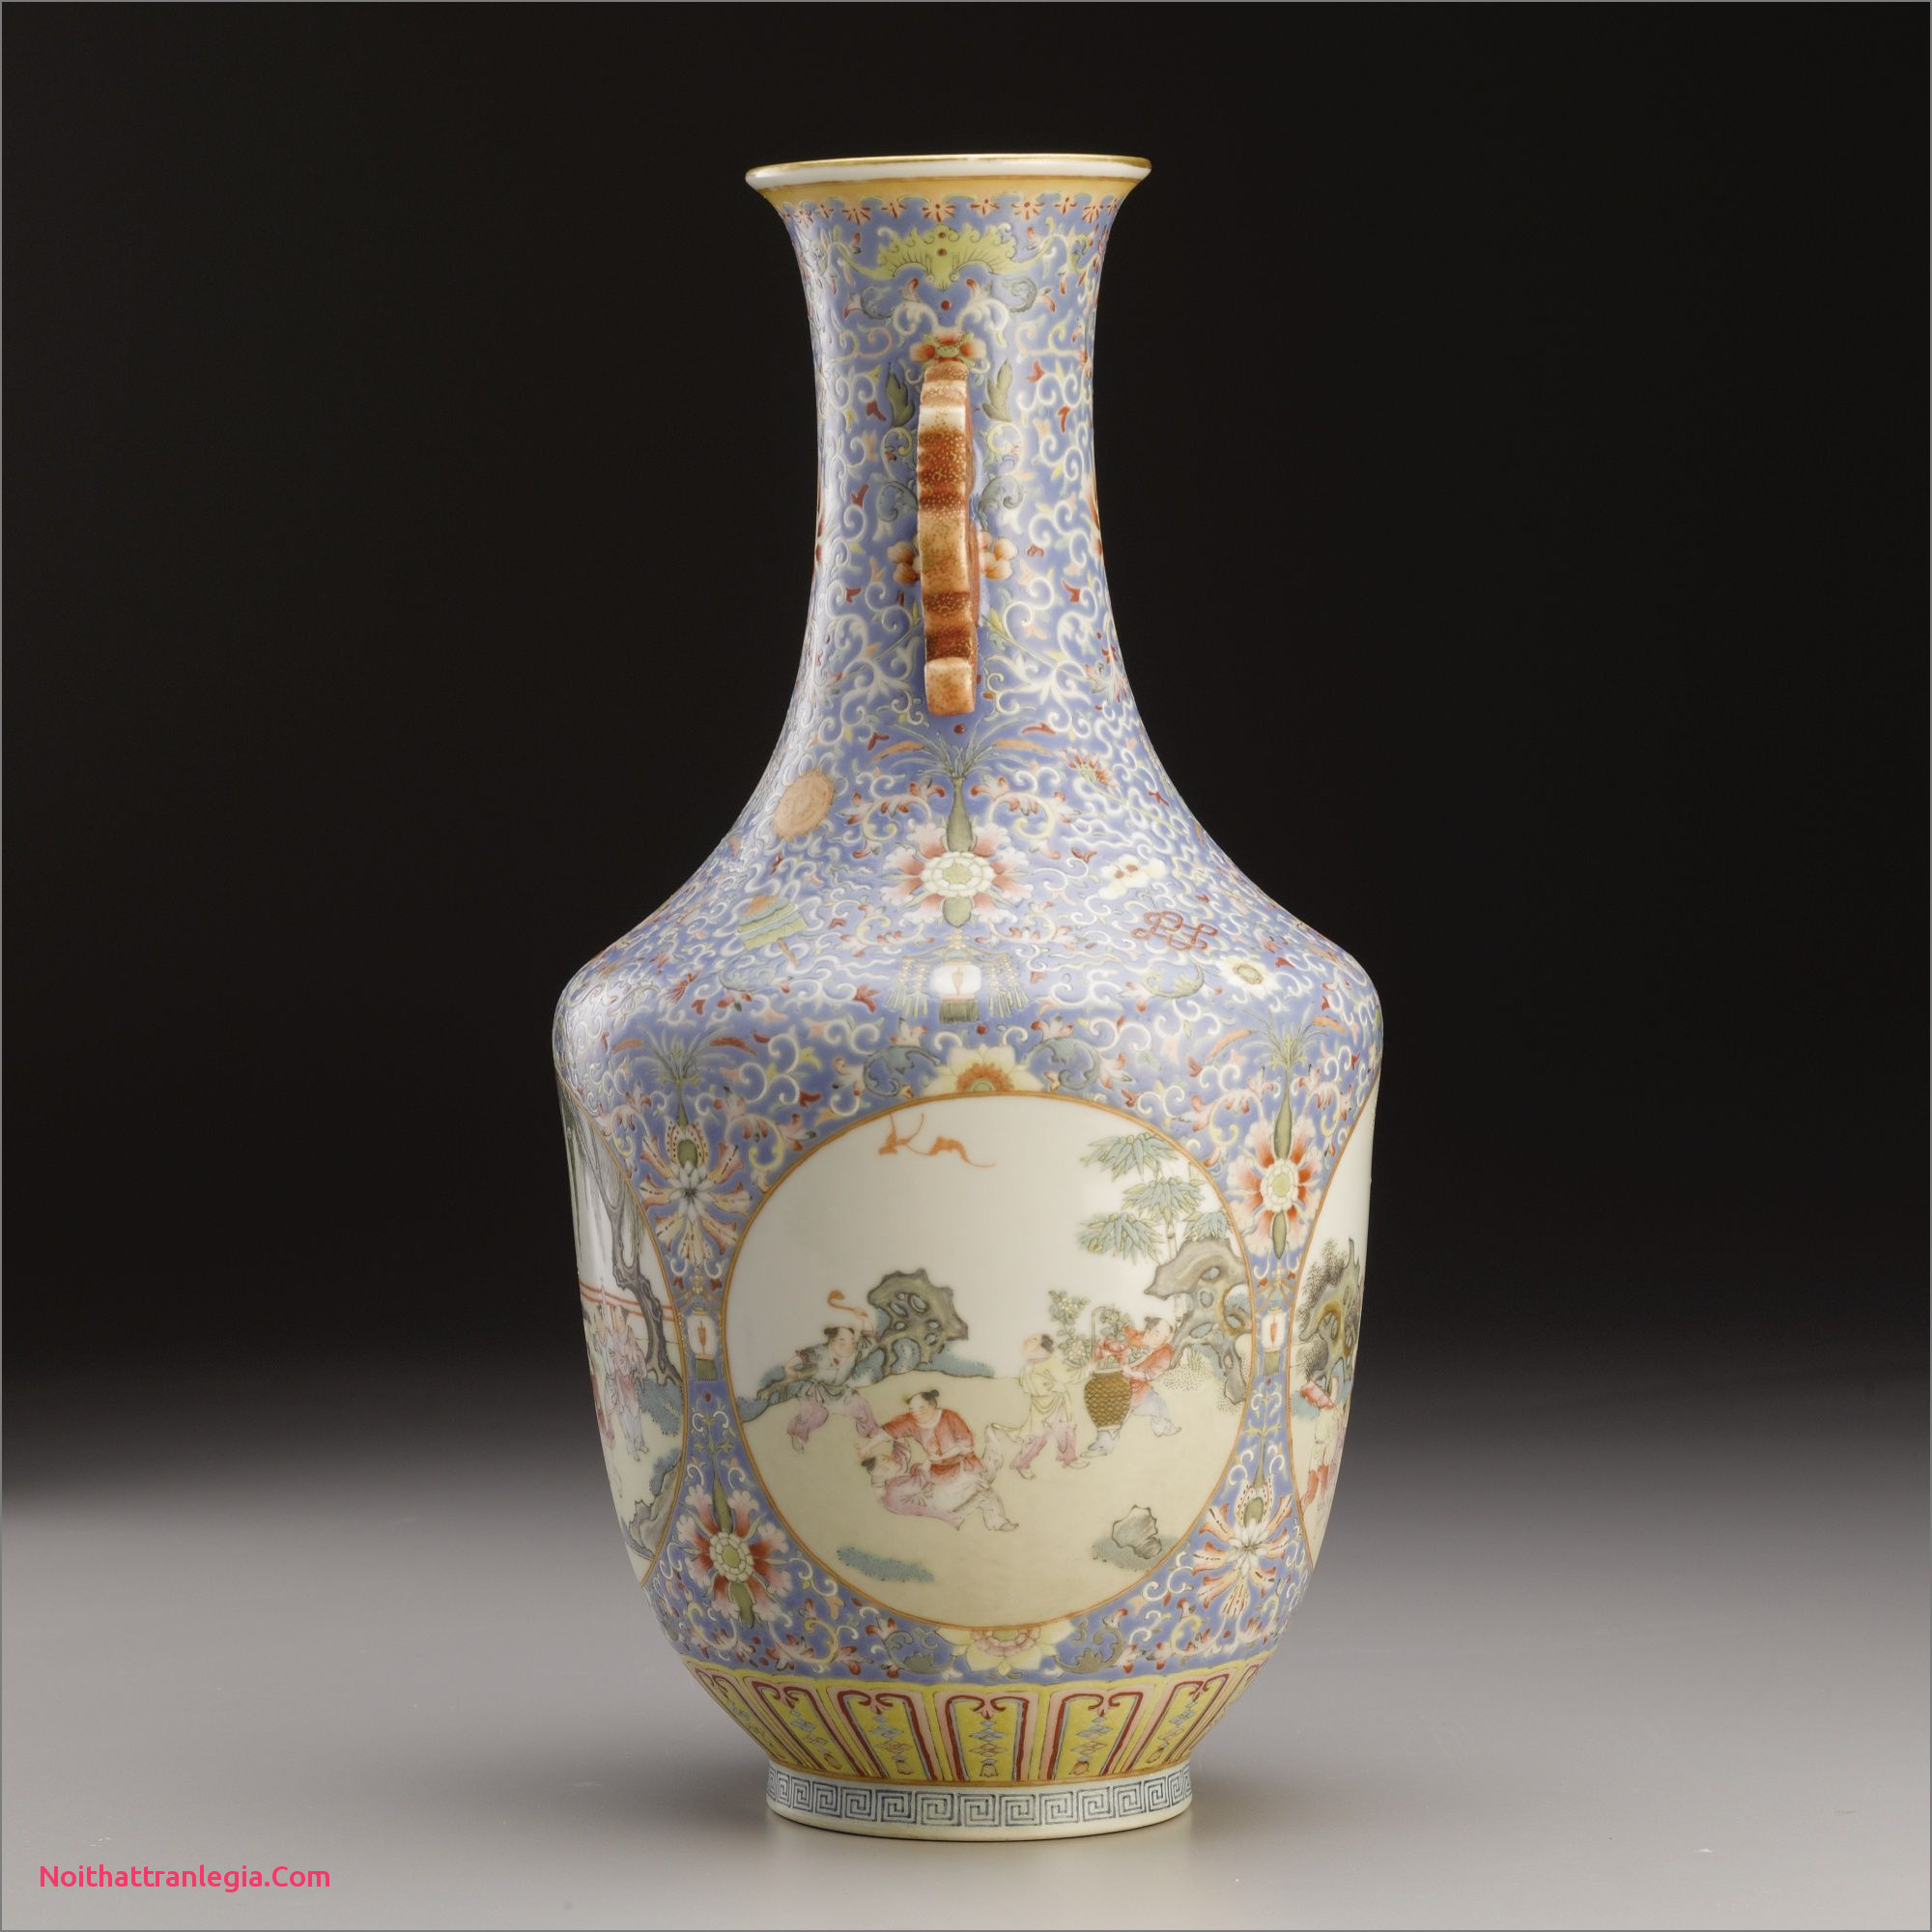 Antique Vases for Sale Of 20 Chinese Antique Vase Noithattranlegia Vases Design In A Fine Blue Ground Famille Rose Vase Qing Dynasty Daoguang